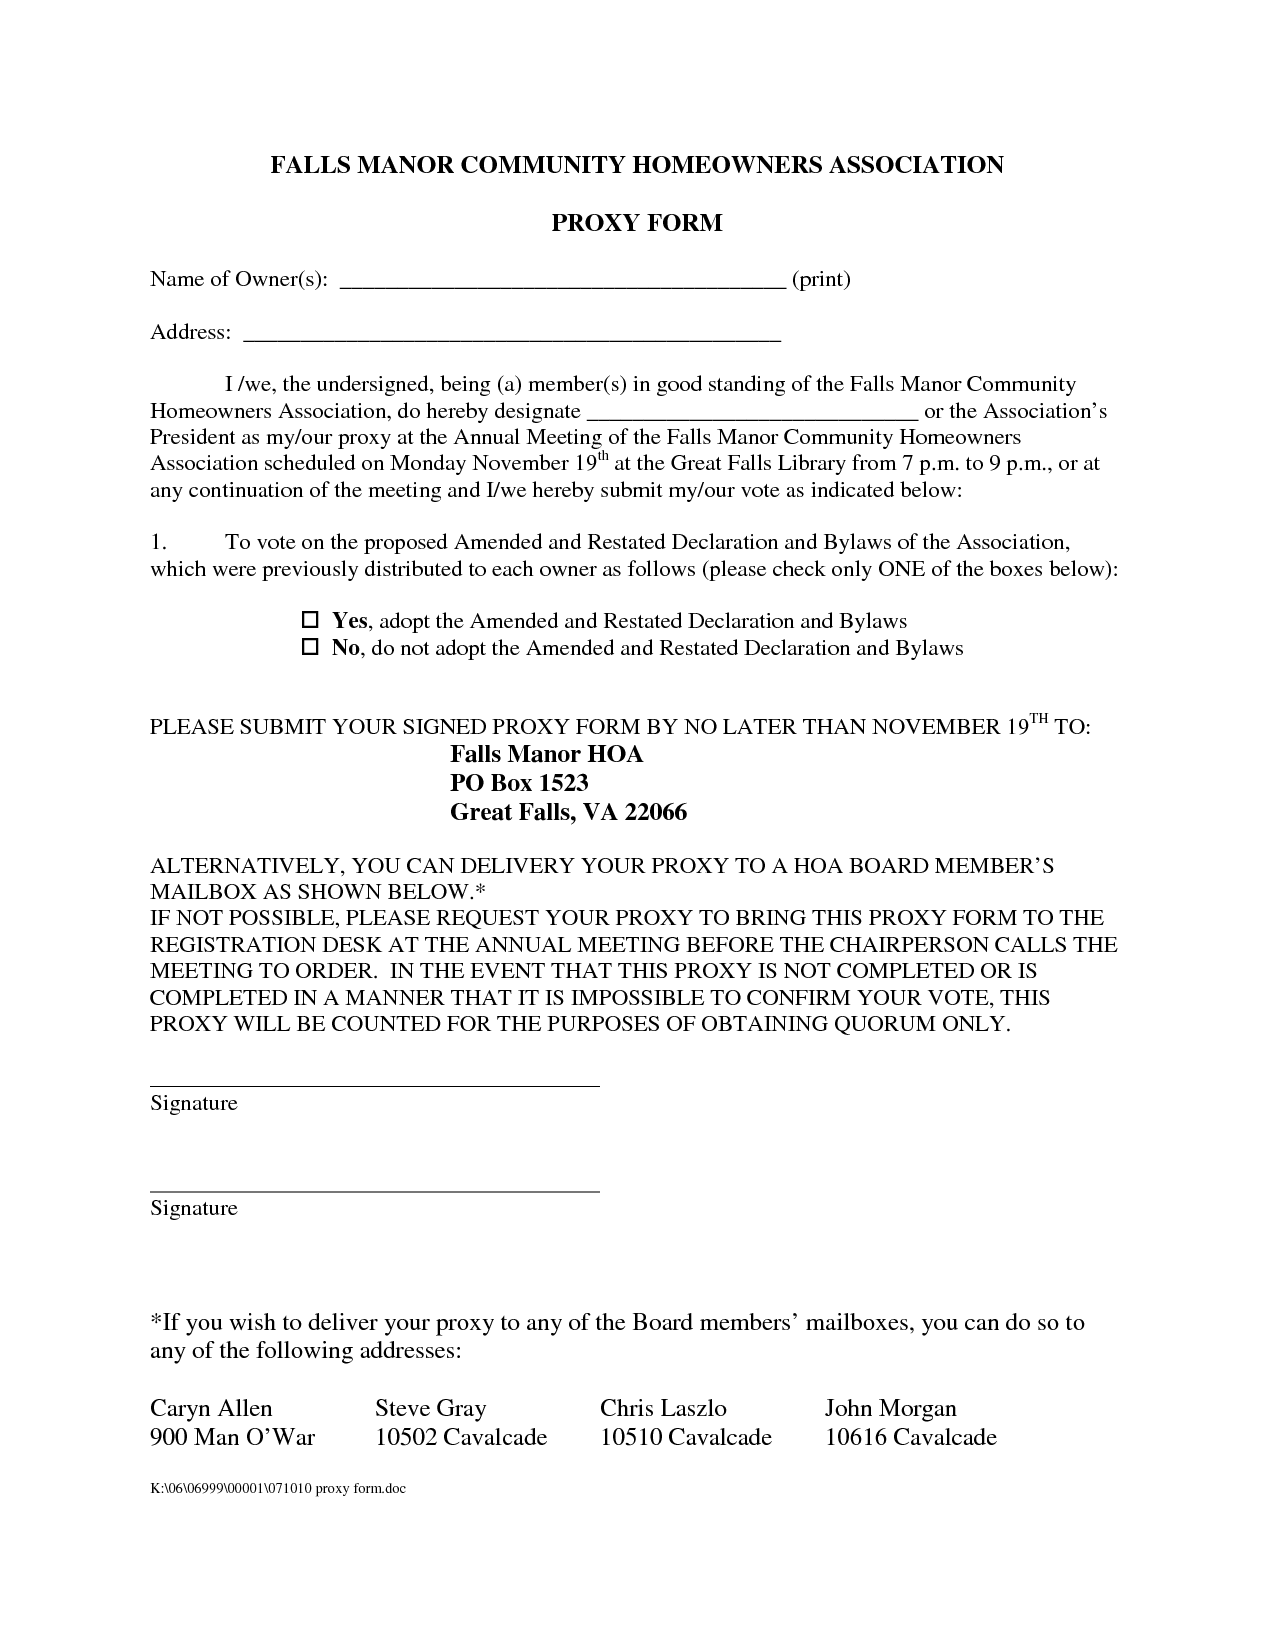 Hoa Proxy Form Template - Free Printable Documents